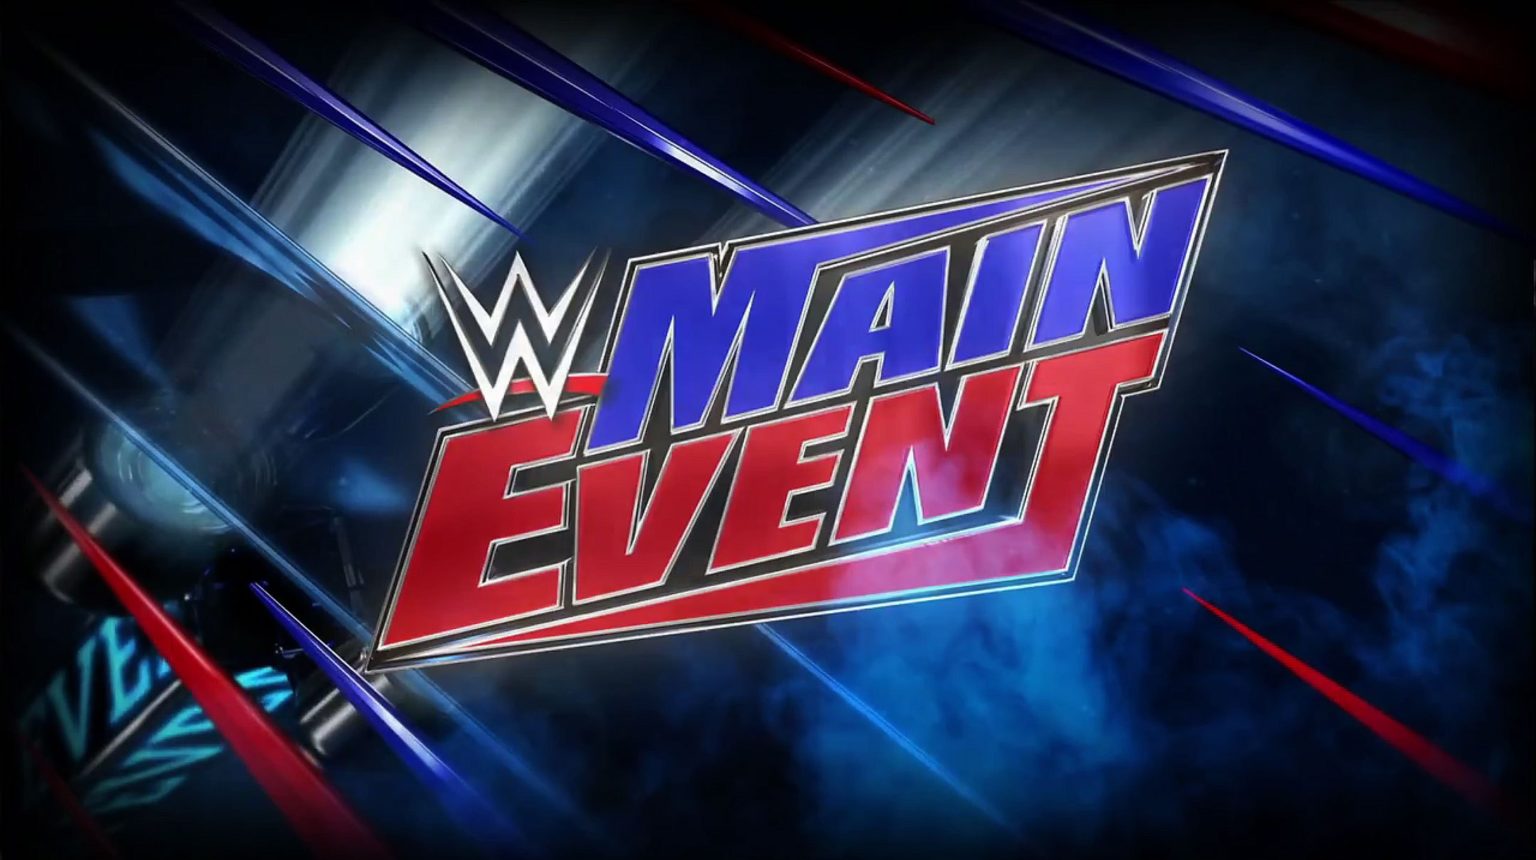 RISULTATI WWE MAIN EVENT 30/04/2018